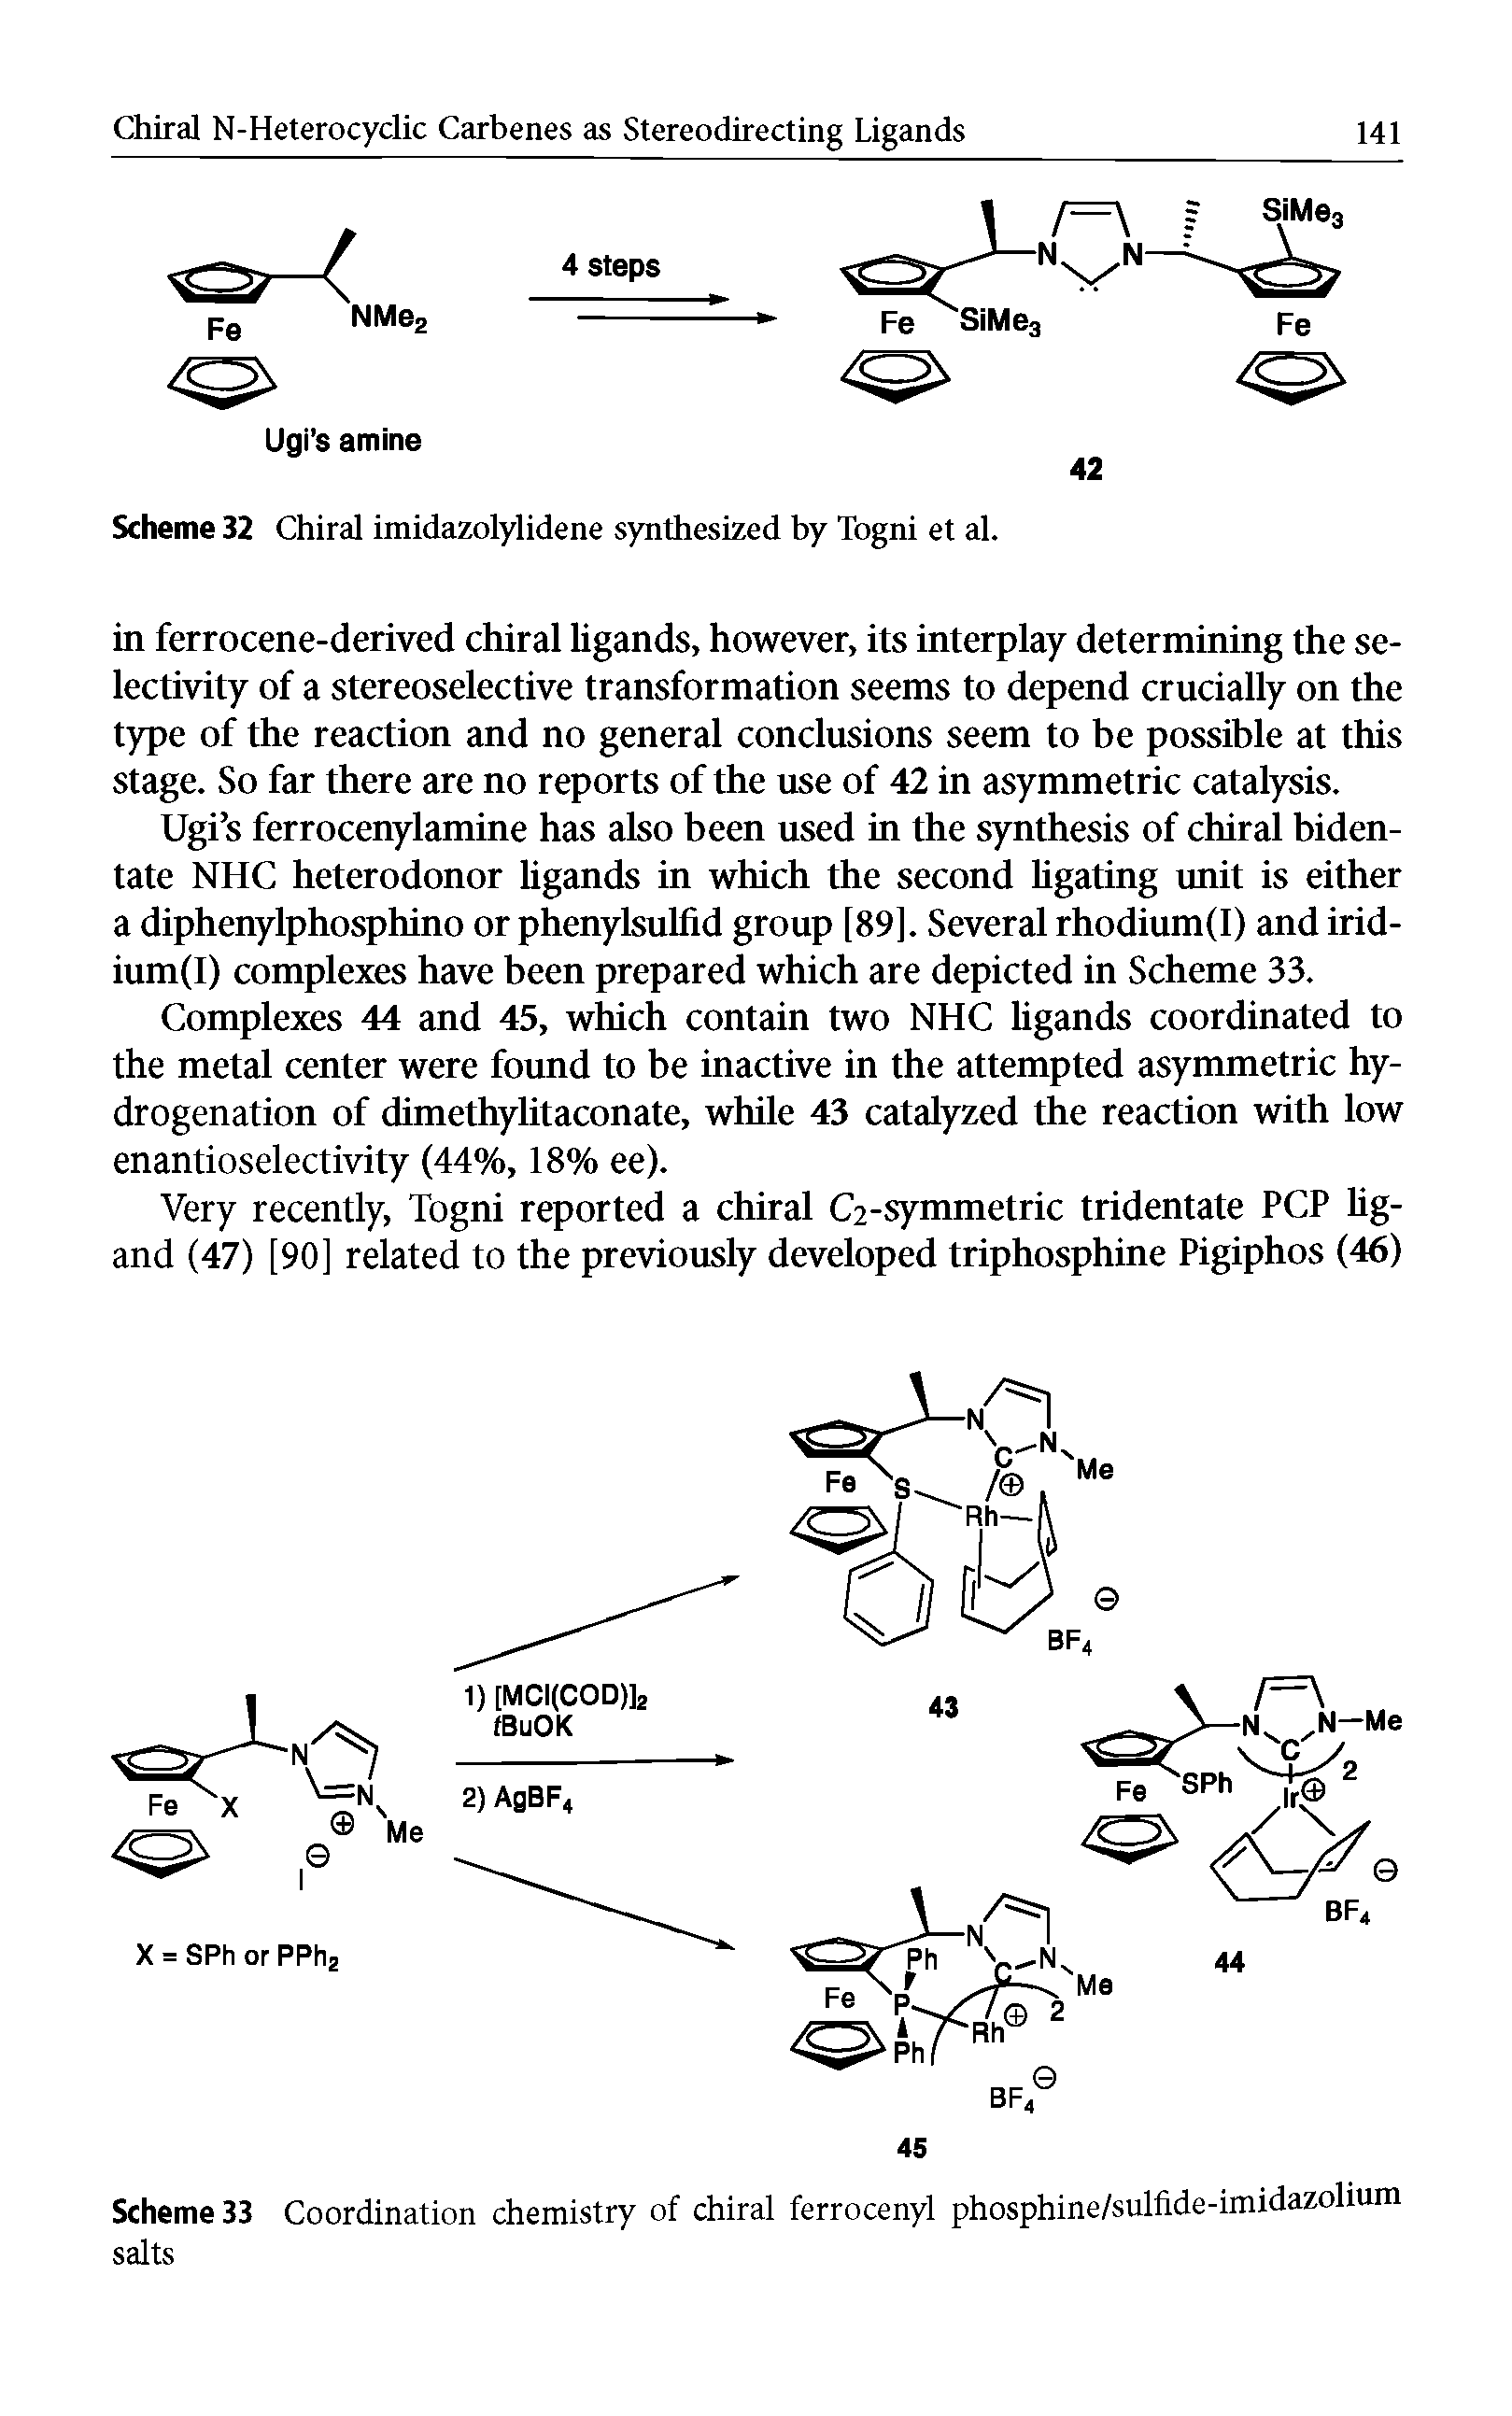 Scheme 33 Coordination chemistry of chiral ferrocenyl phosphine/sulfide-imidazolium salts...